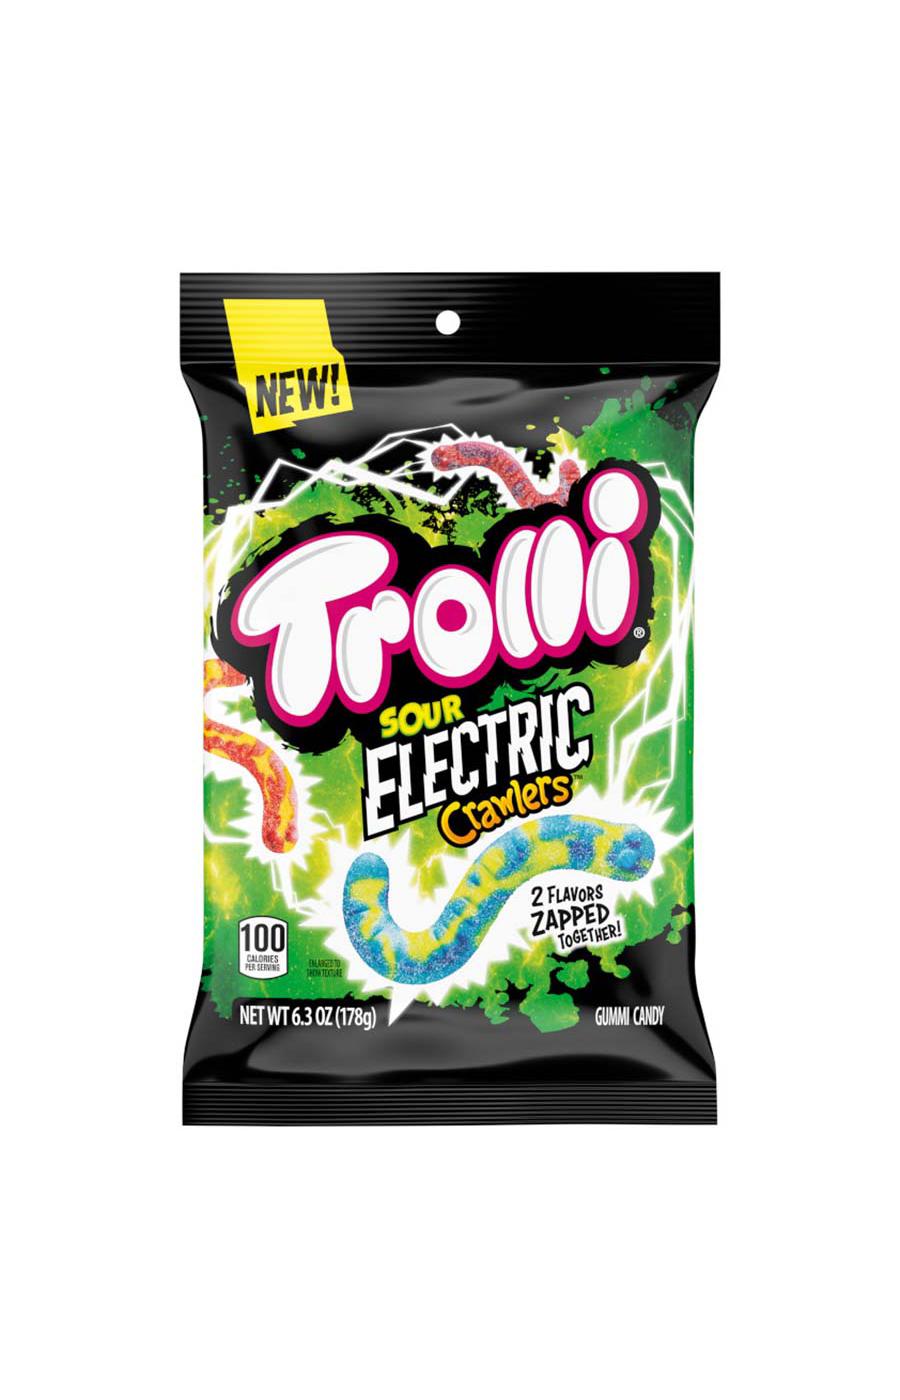 Trolli Sour Electric Crawlers Gummi Candy; image 1 of 2